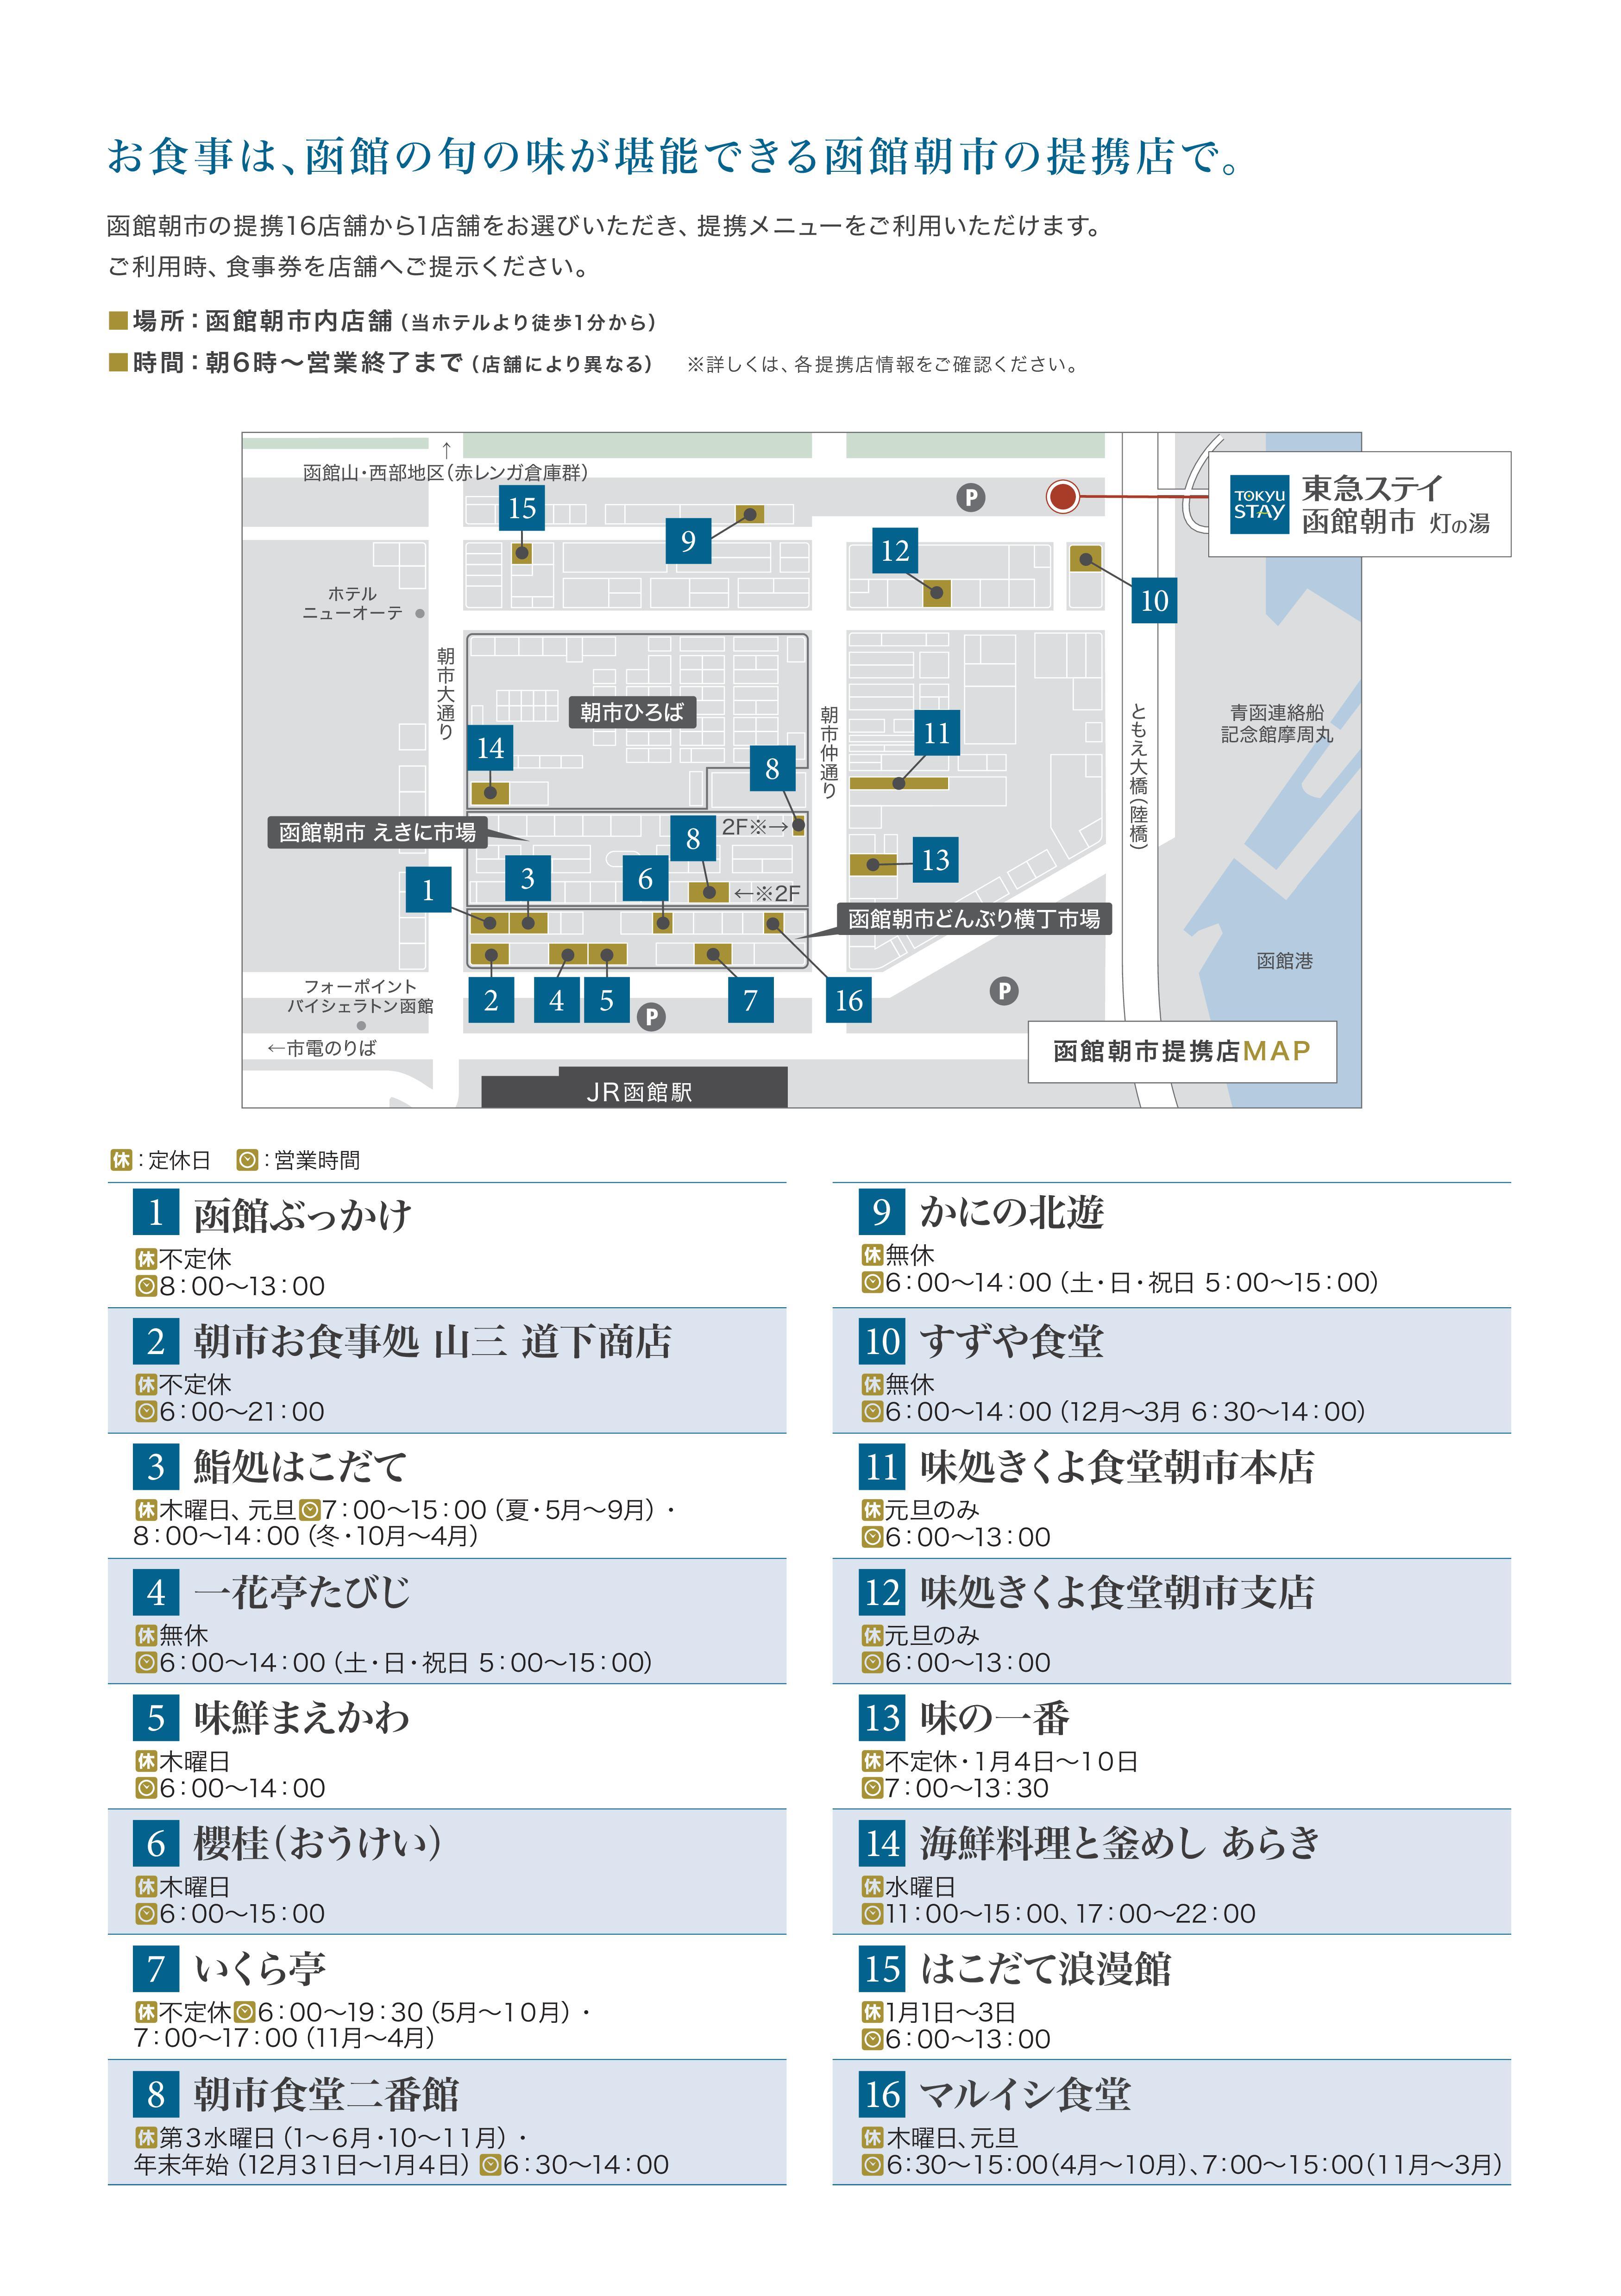 http://www.tokyustay.co.jp/hotel/HAA/topics/upload/00_map.jpg